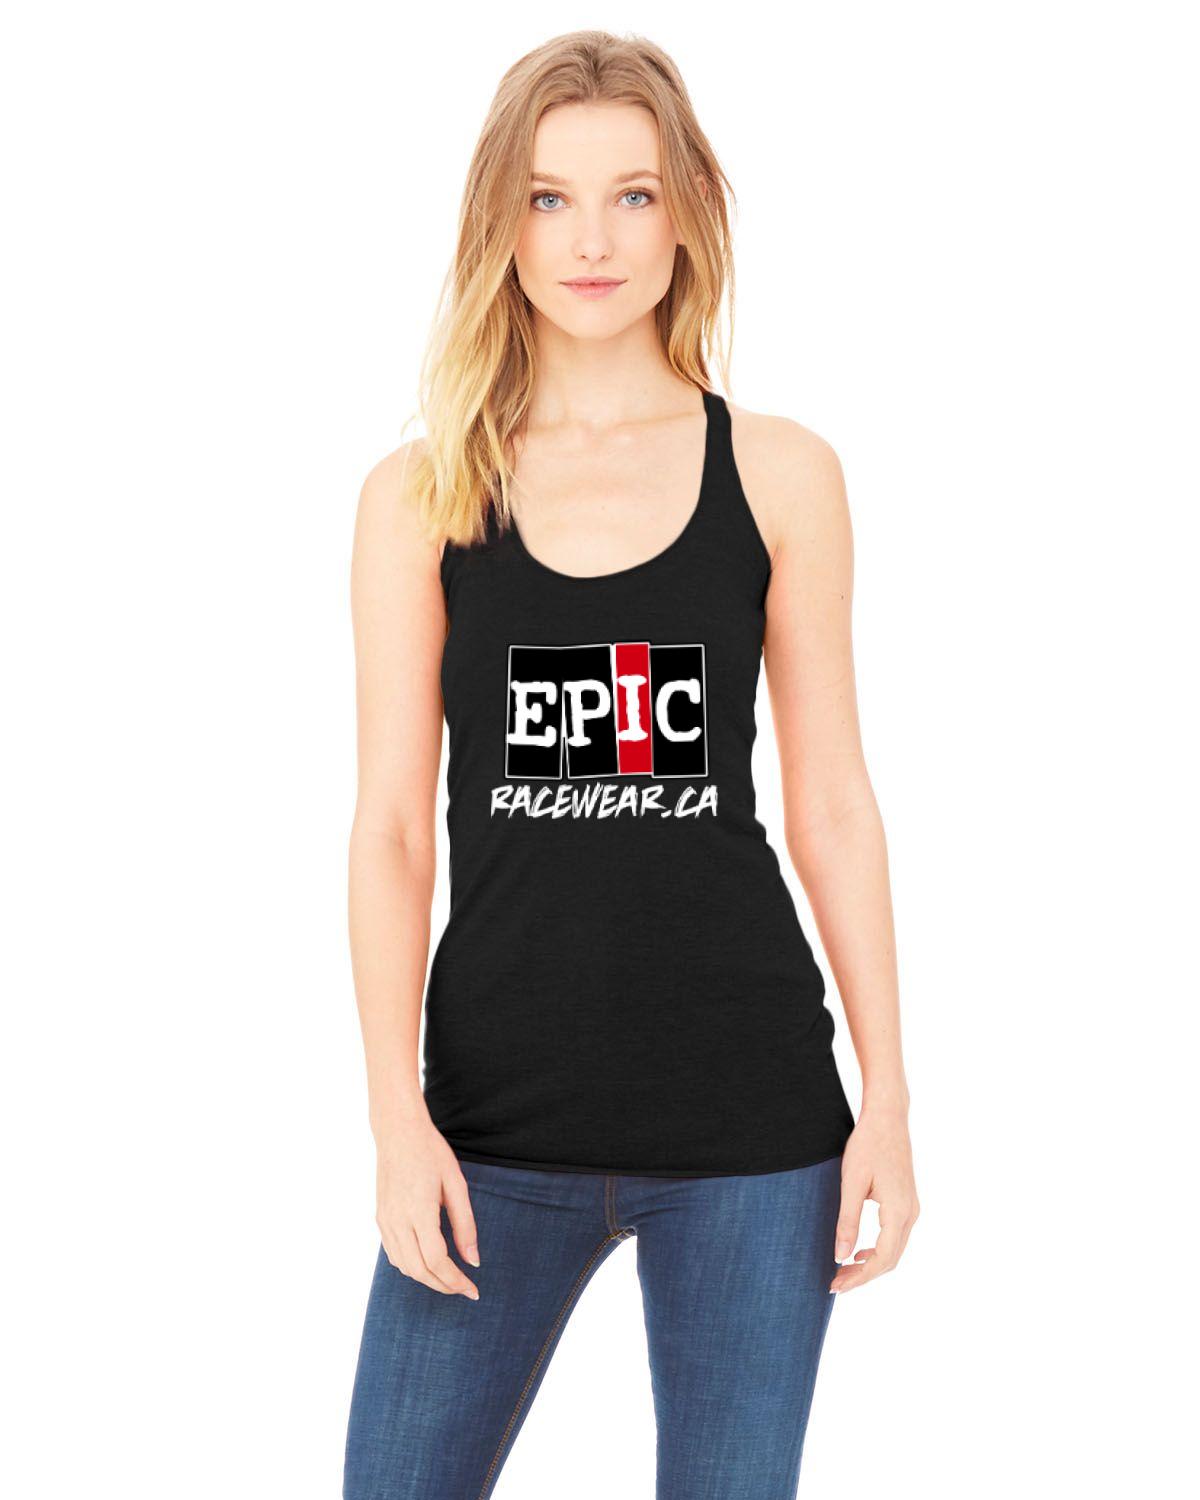 EPIC Racewear Bella Canvas Ladies RacerBack Tank